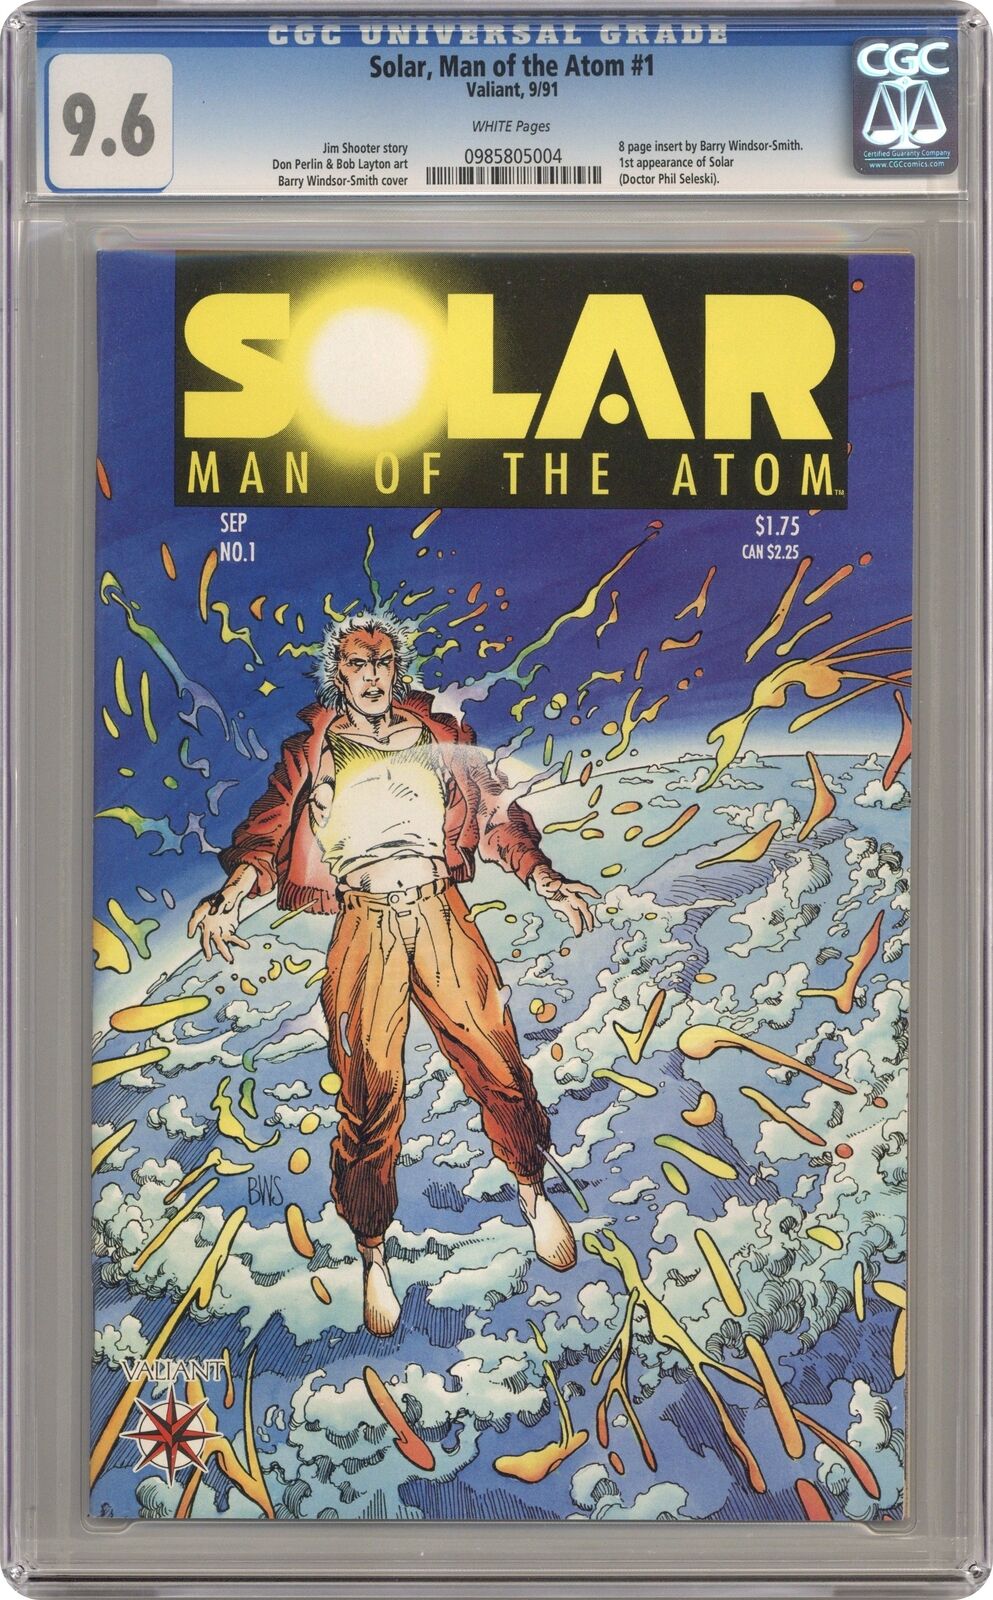 Solar Man of the Atom #1 CGC 9.6 1991 0985805004